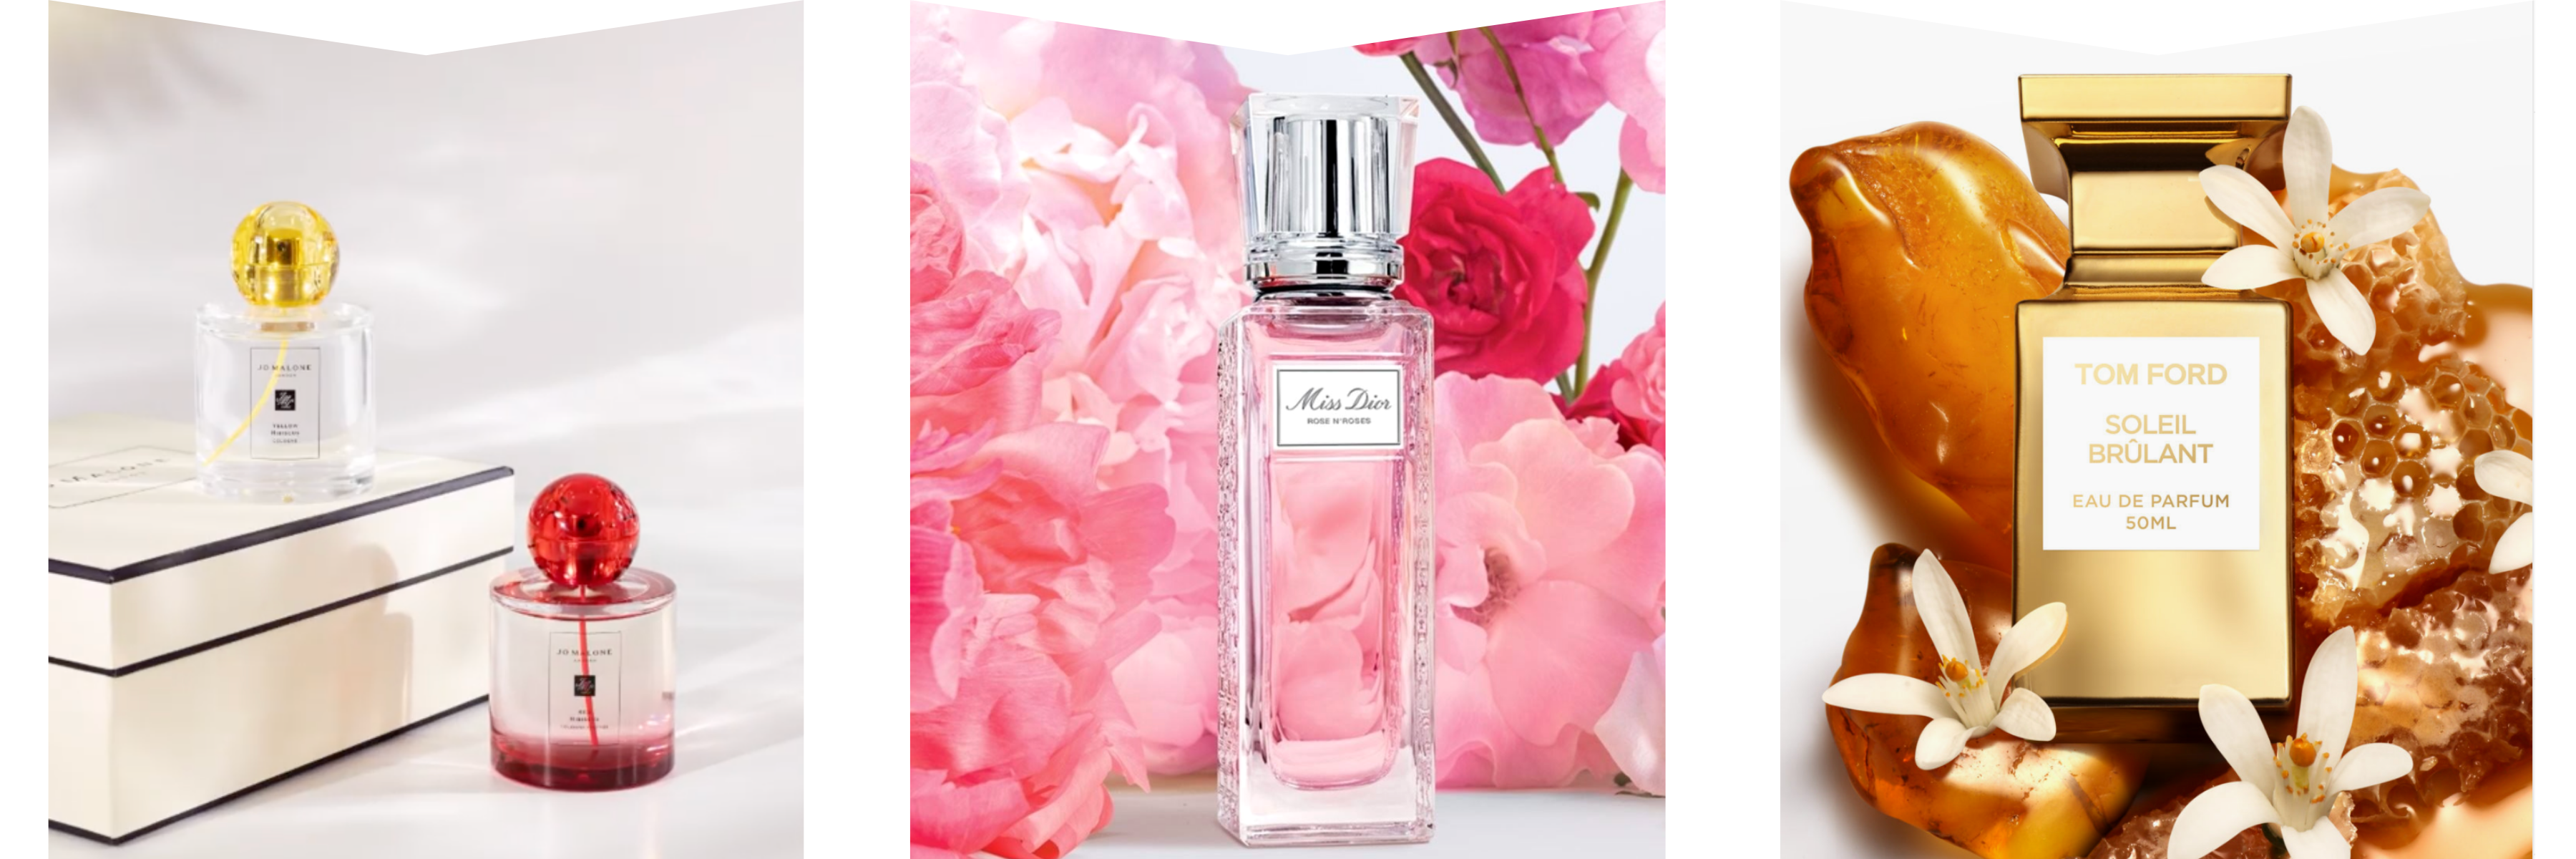 Jo Malone, Dior & Tom Ford perfume